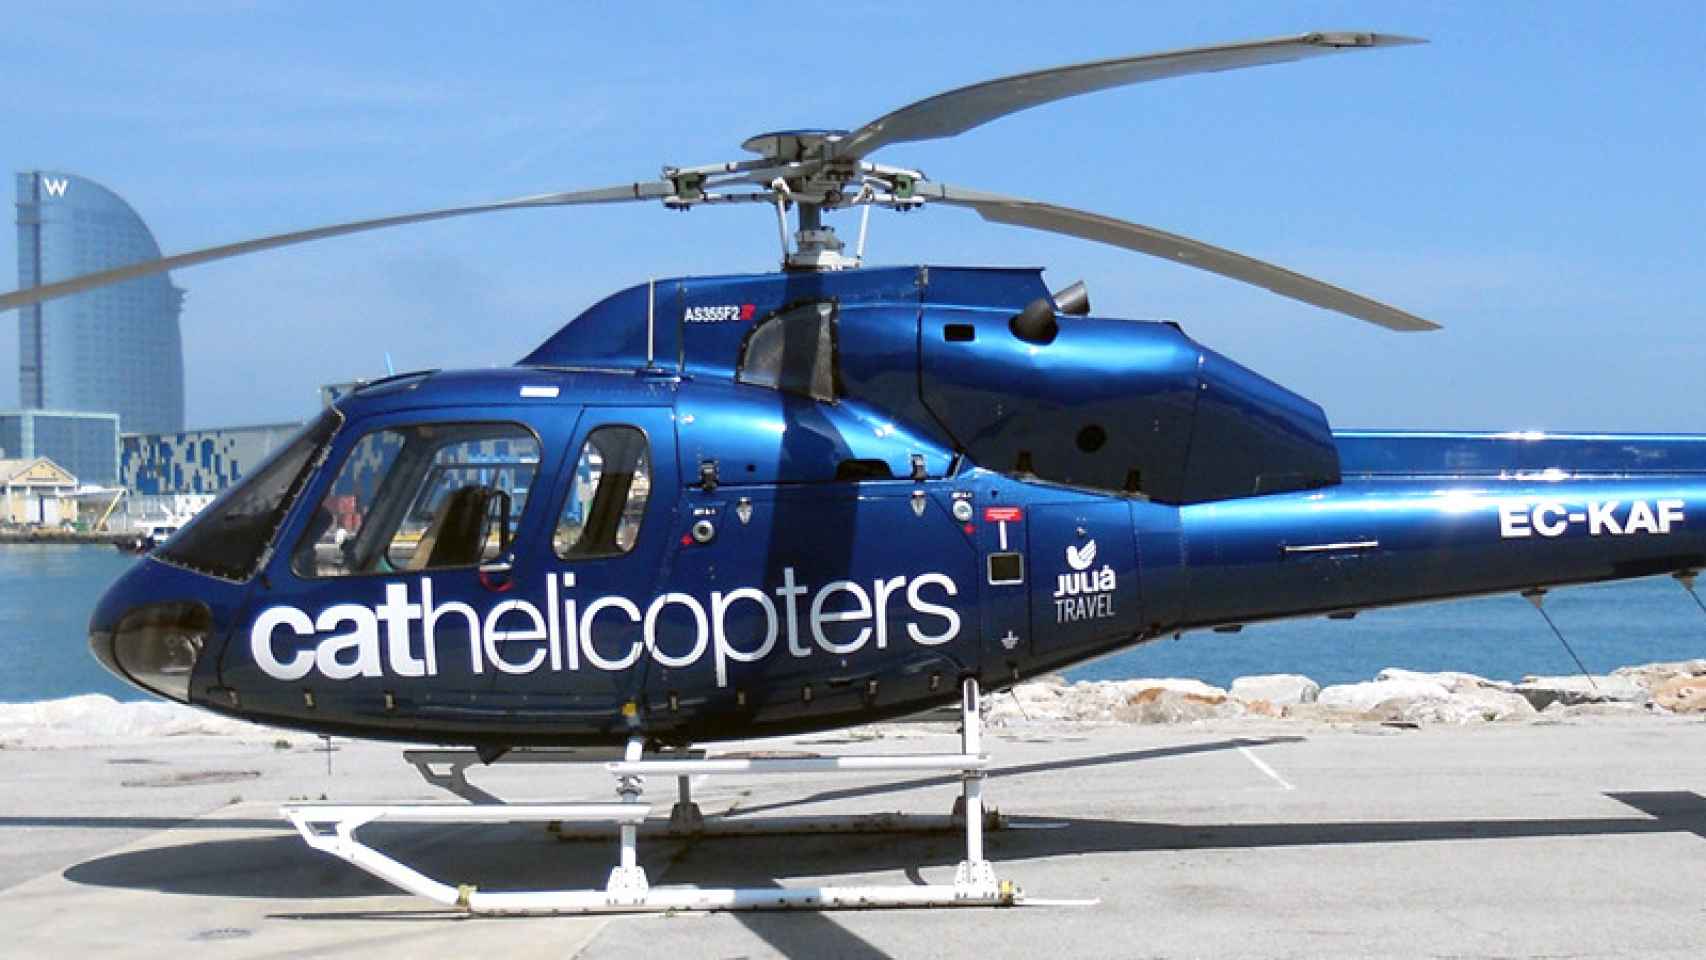 Un modelo Eurocopter Ecuriel de la flota de Cathelicopters.